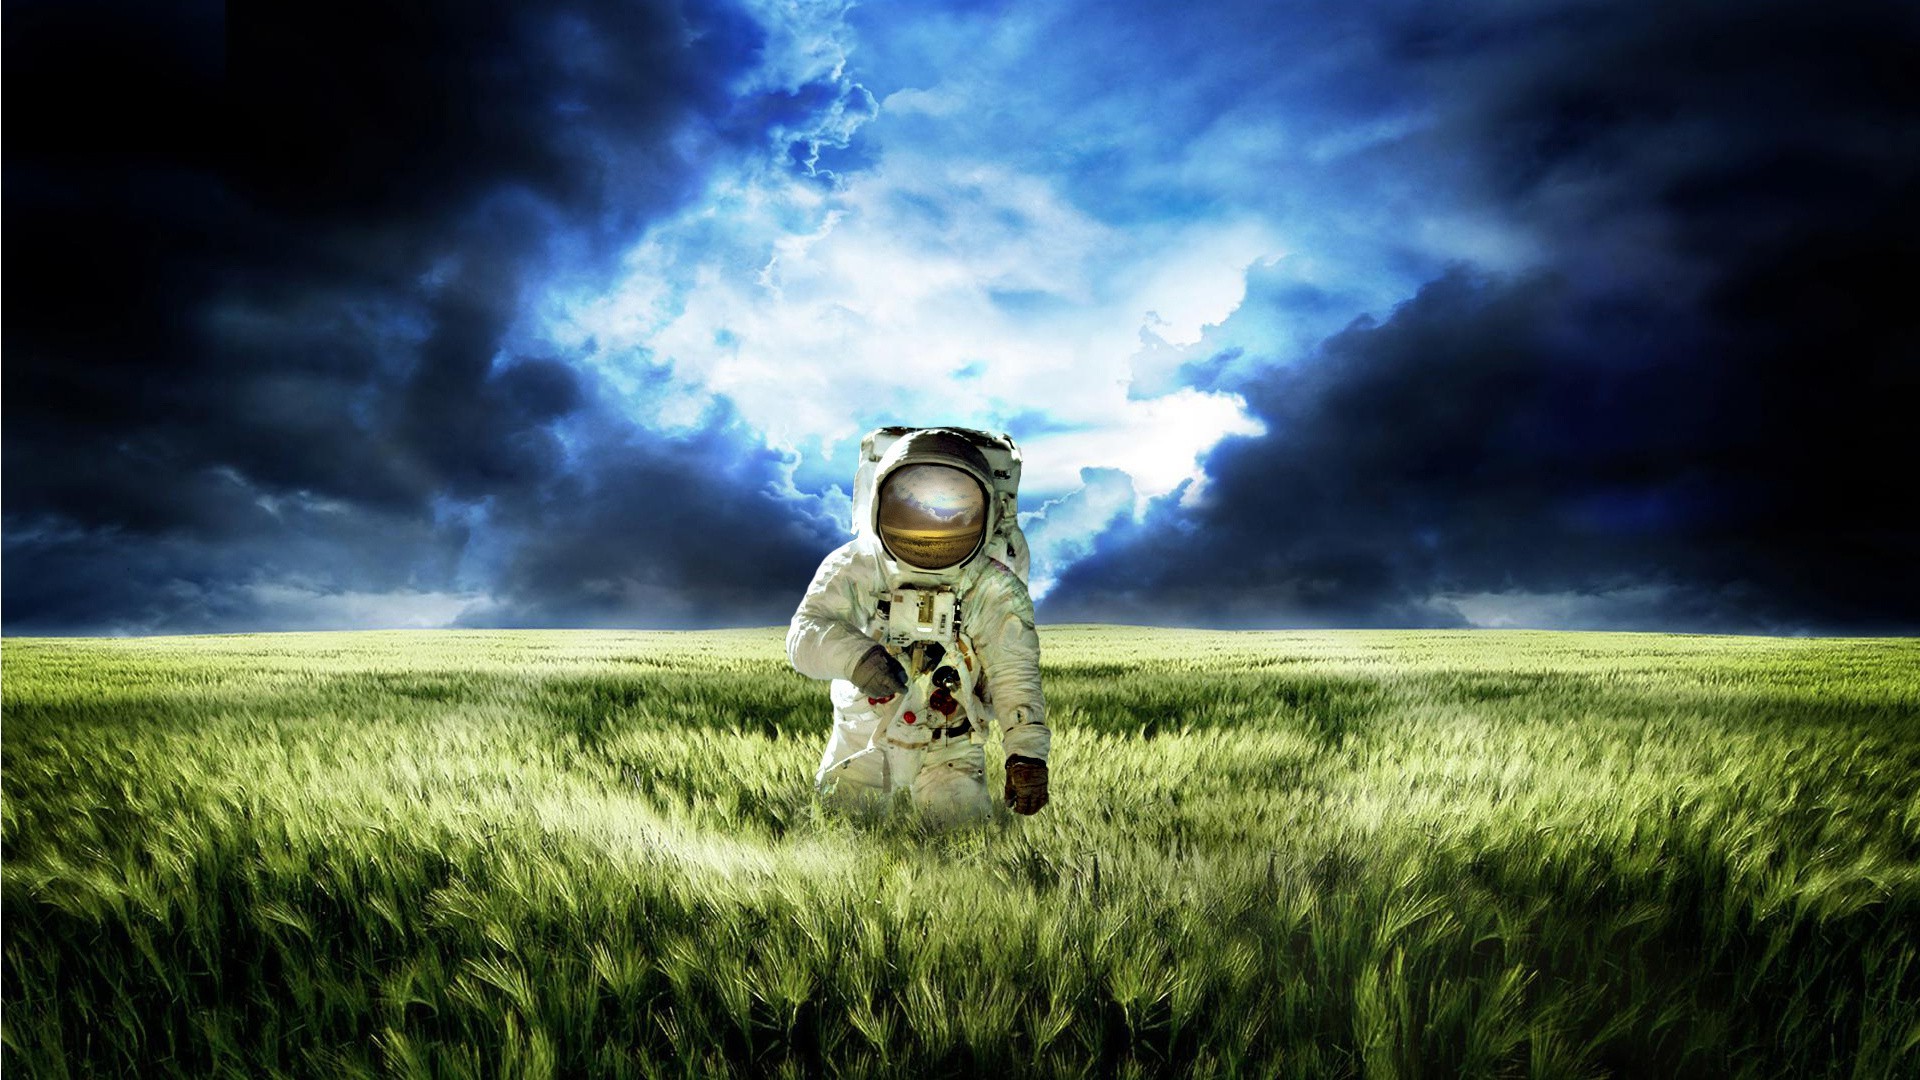 digital Art, Astronaut, Helmet, Space Suit, Nature, Field, Spikelets